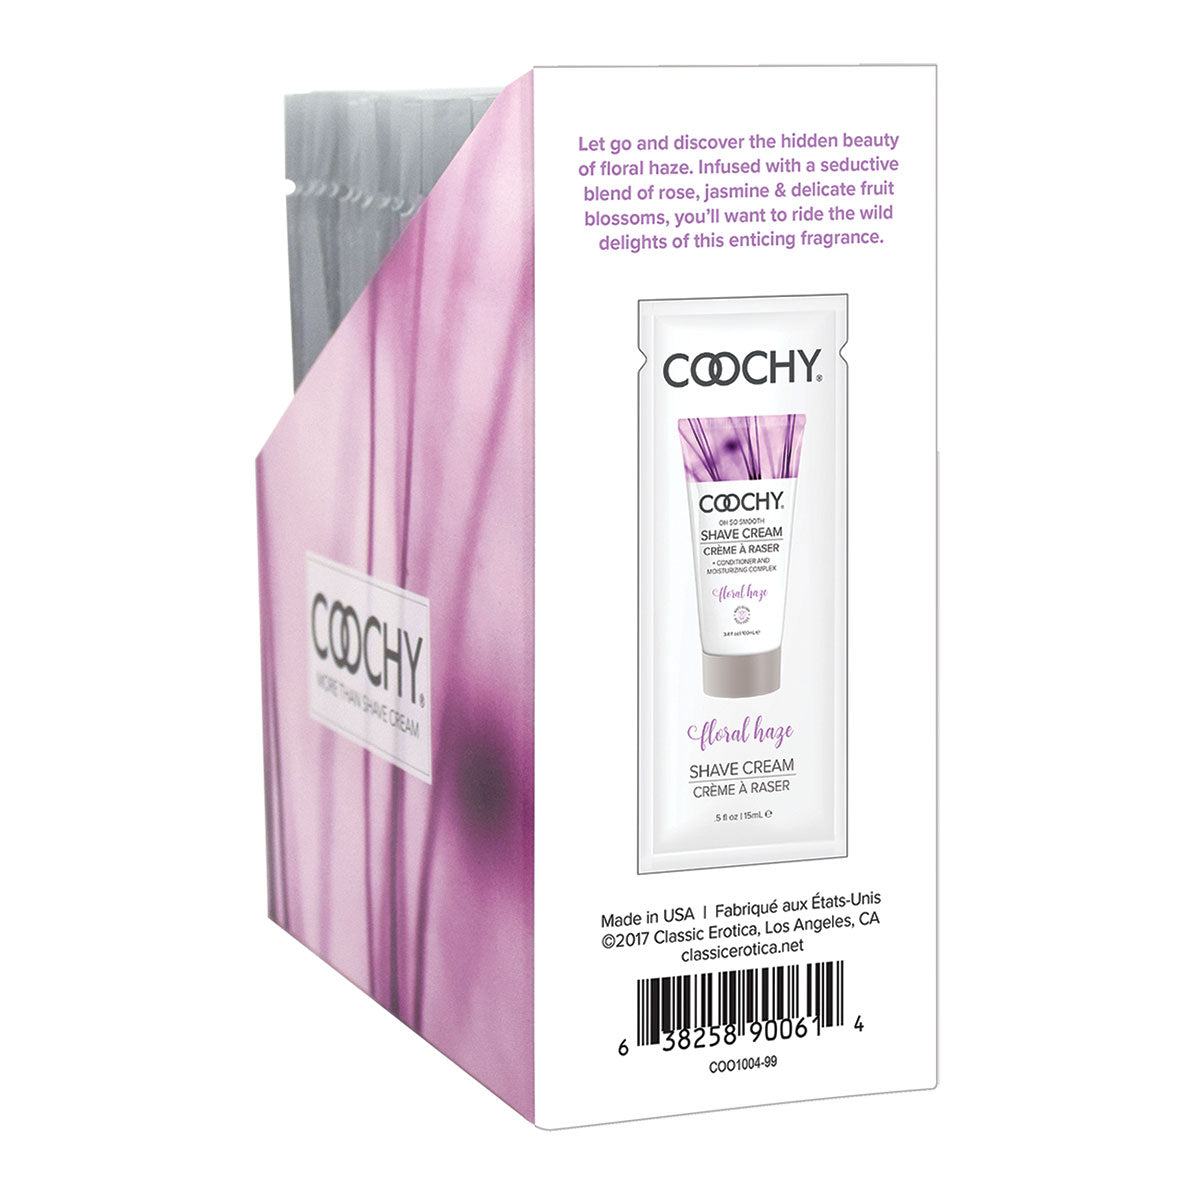 Coochy Shave Cream 15ml. 24pc. Display - Floral Haze